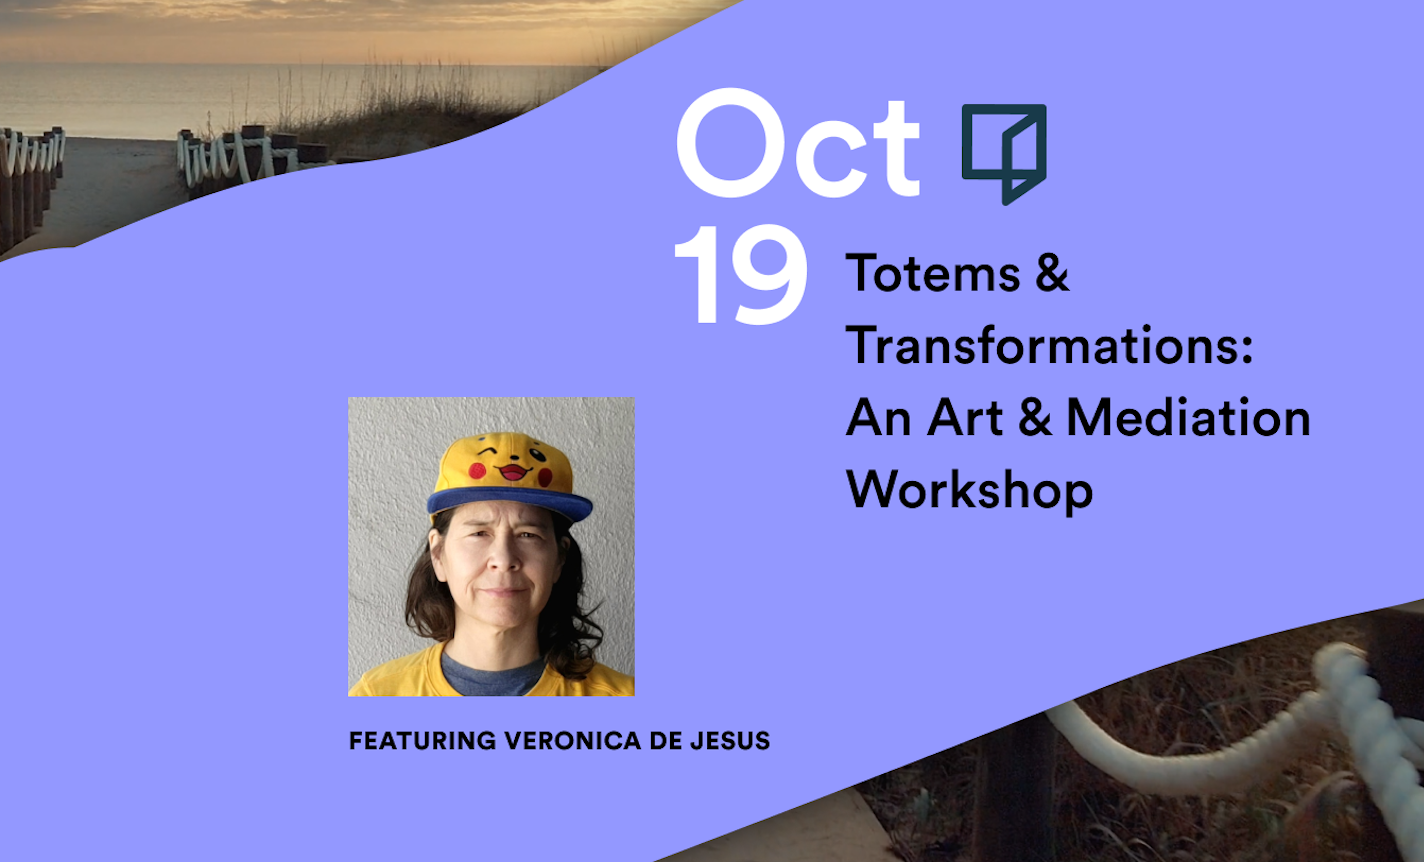 Totems & Transformations: An Art & Meditation Workshop